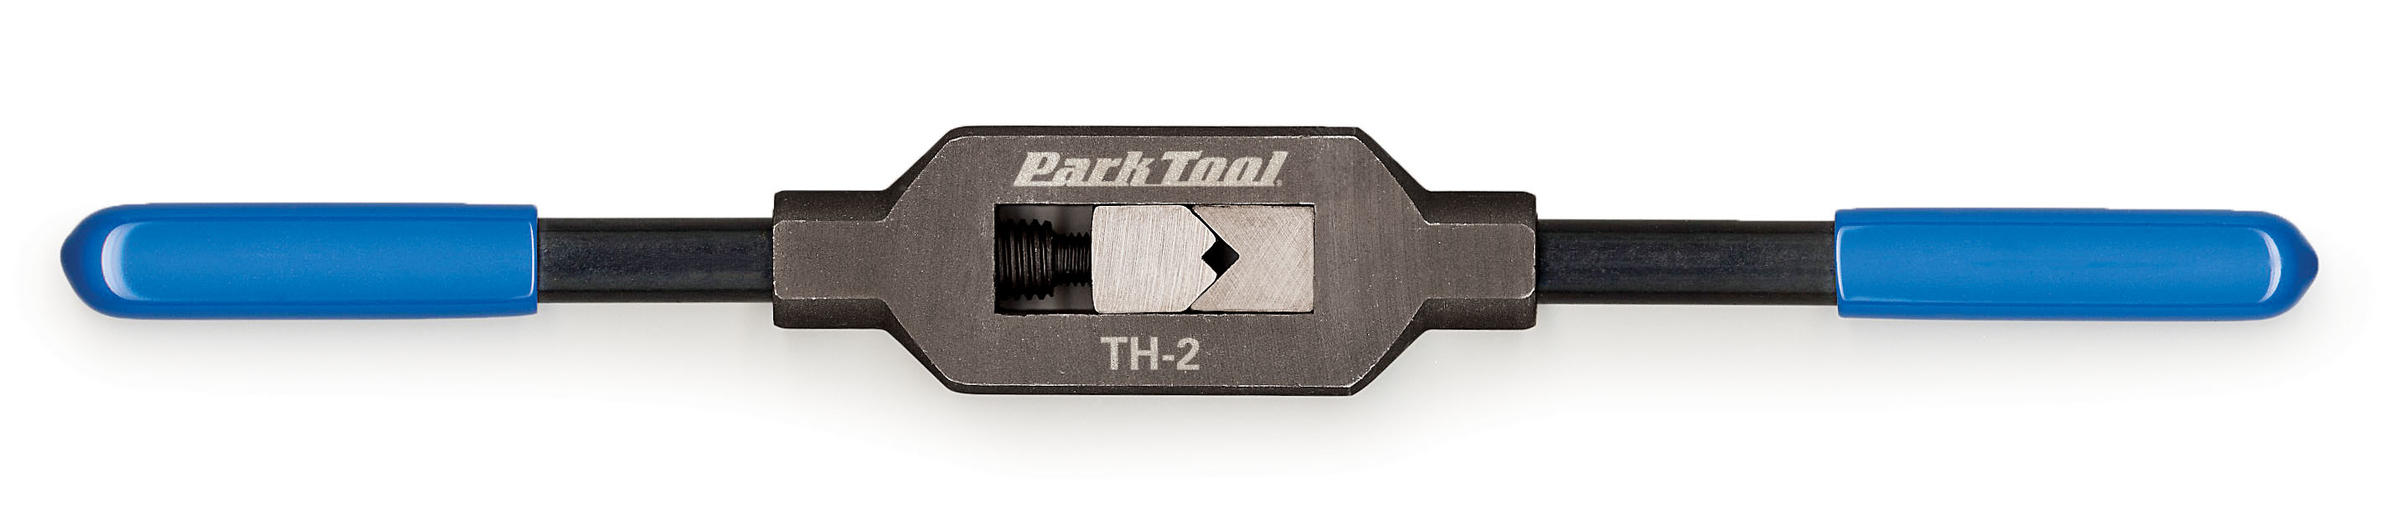 Park Tool TH-2 Tap Handle 8-9/16" Taps 